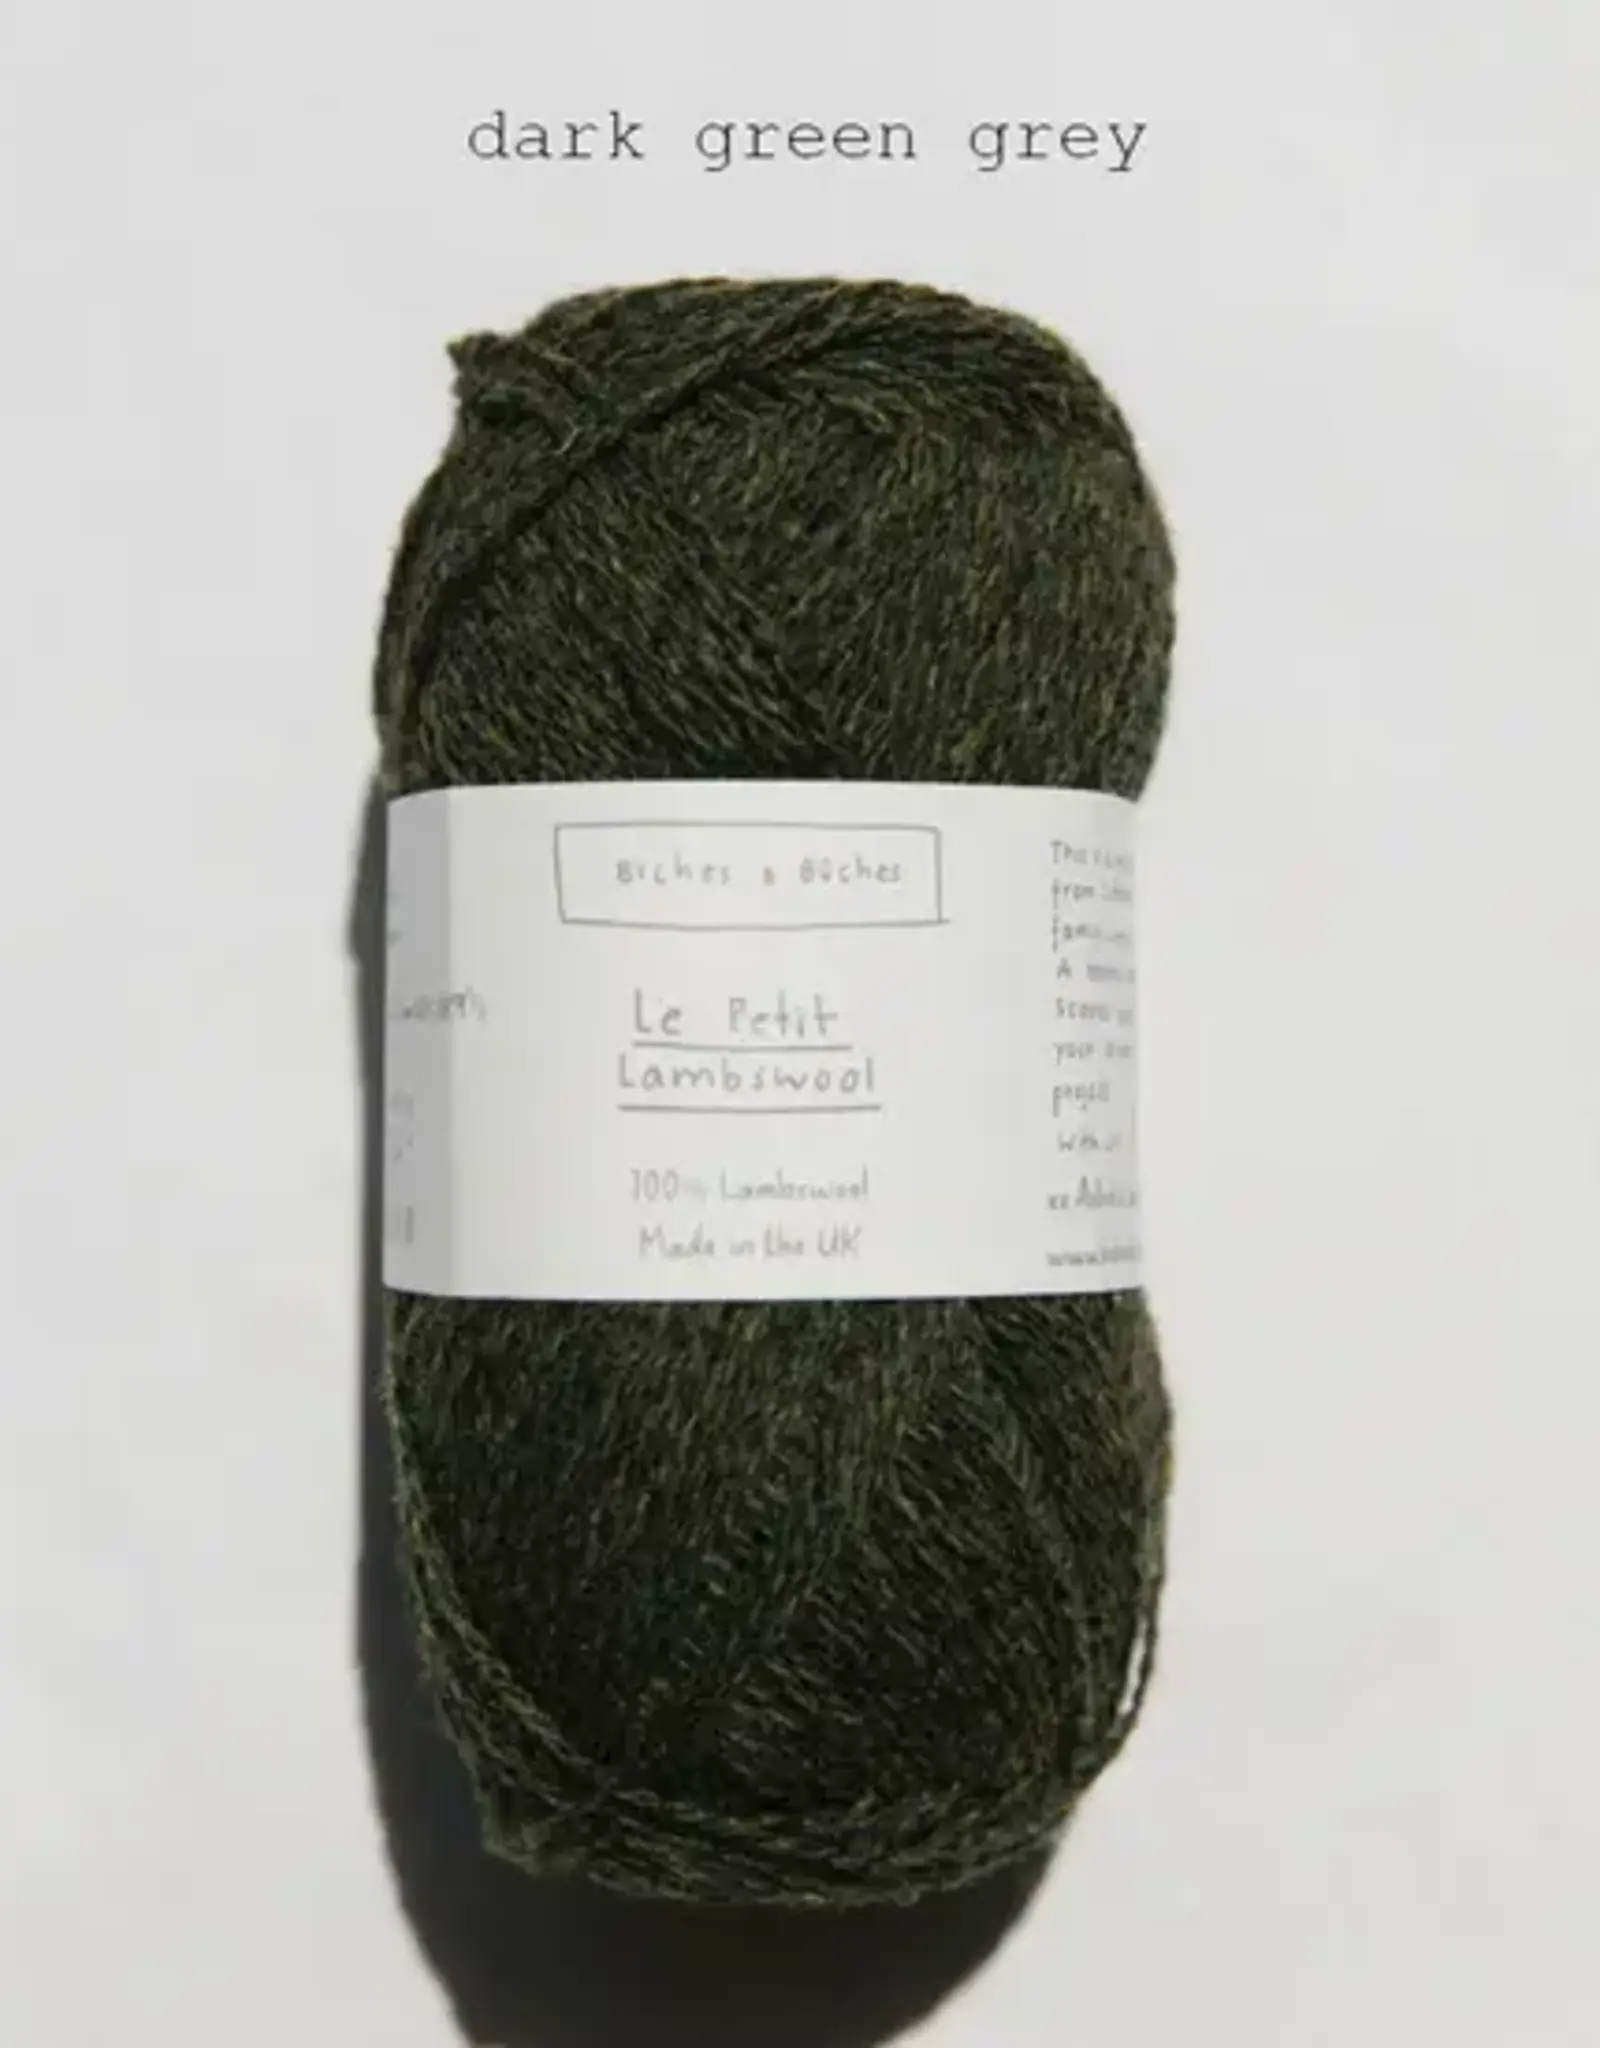 Biches & Buches Le Petit Lambswool dark green grey